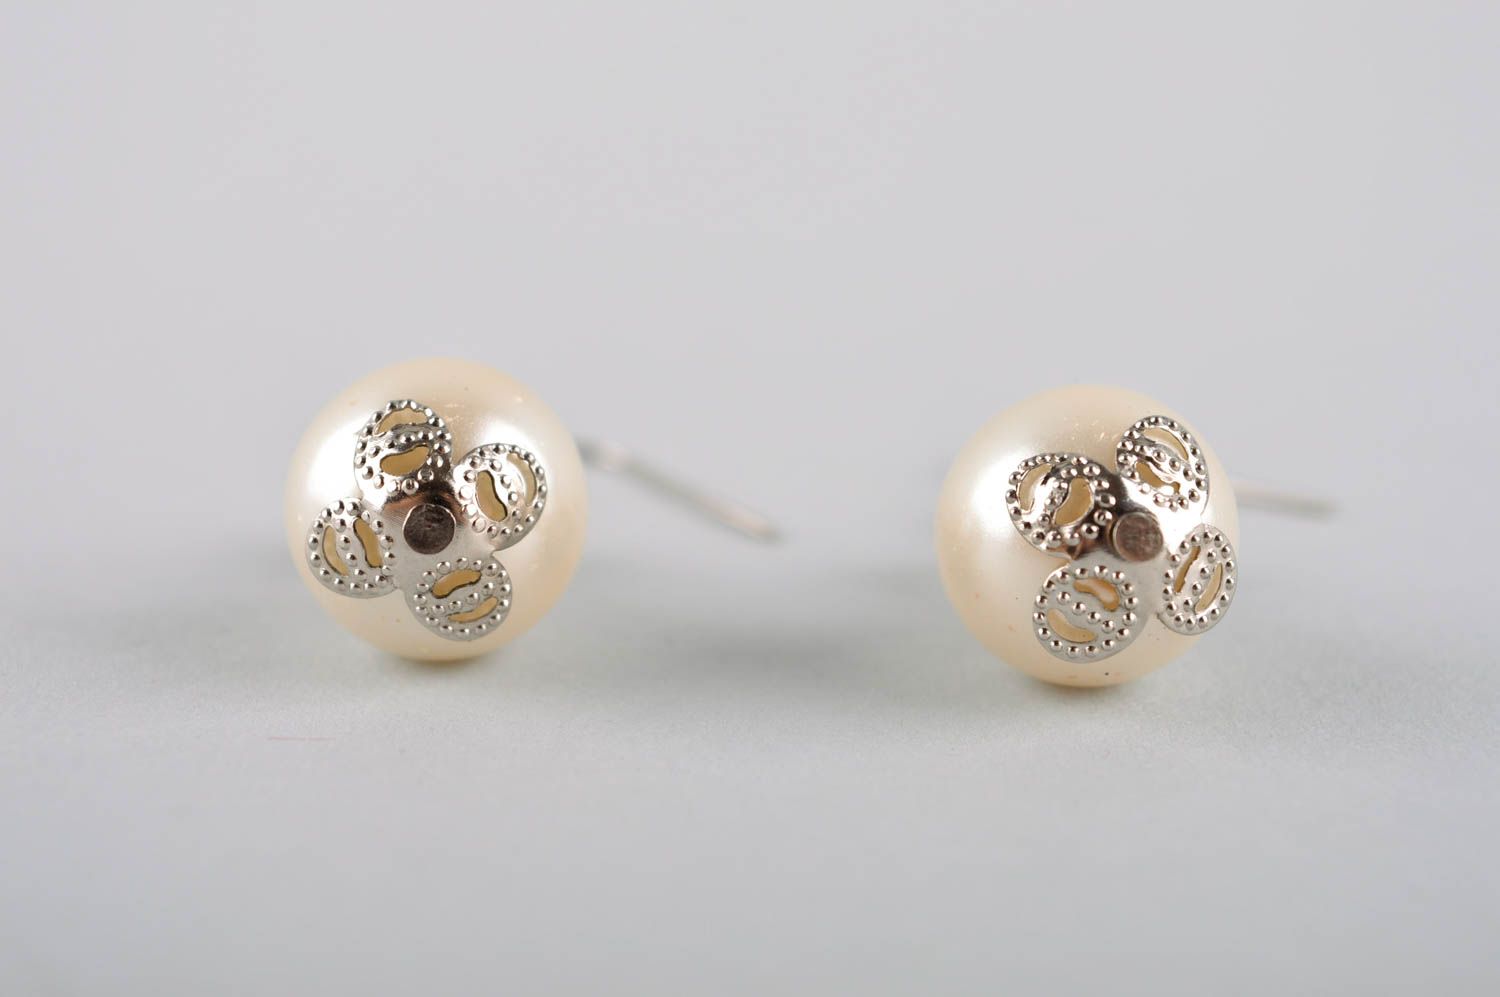 Homemade jewelry designer earrings cute earrings fashion accessories gift ideas photo 4